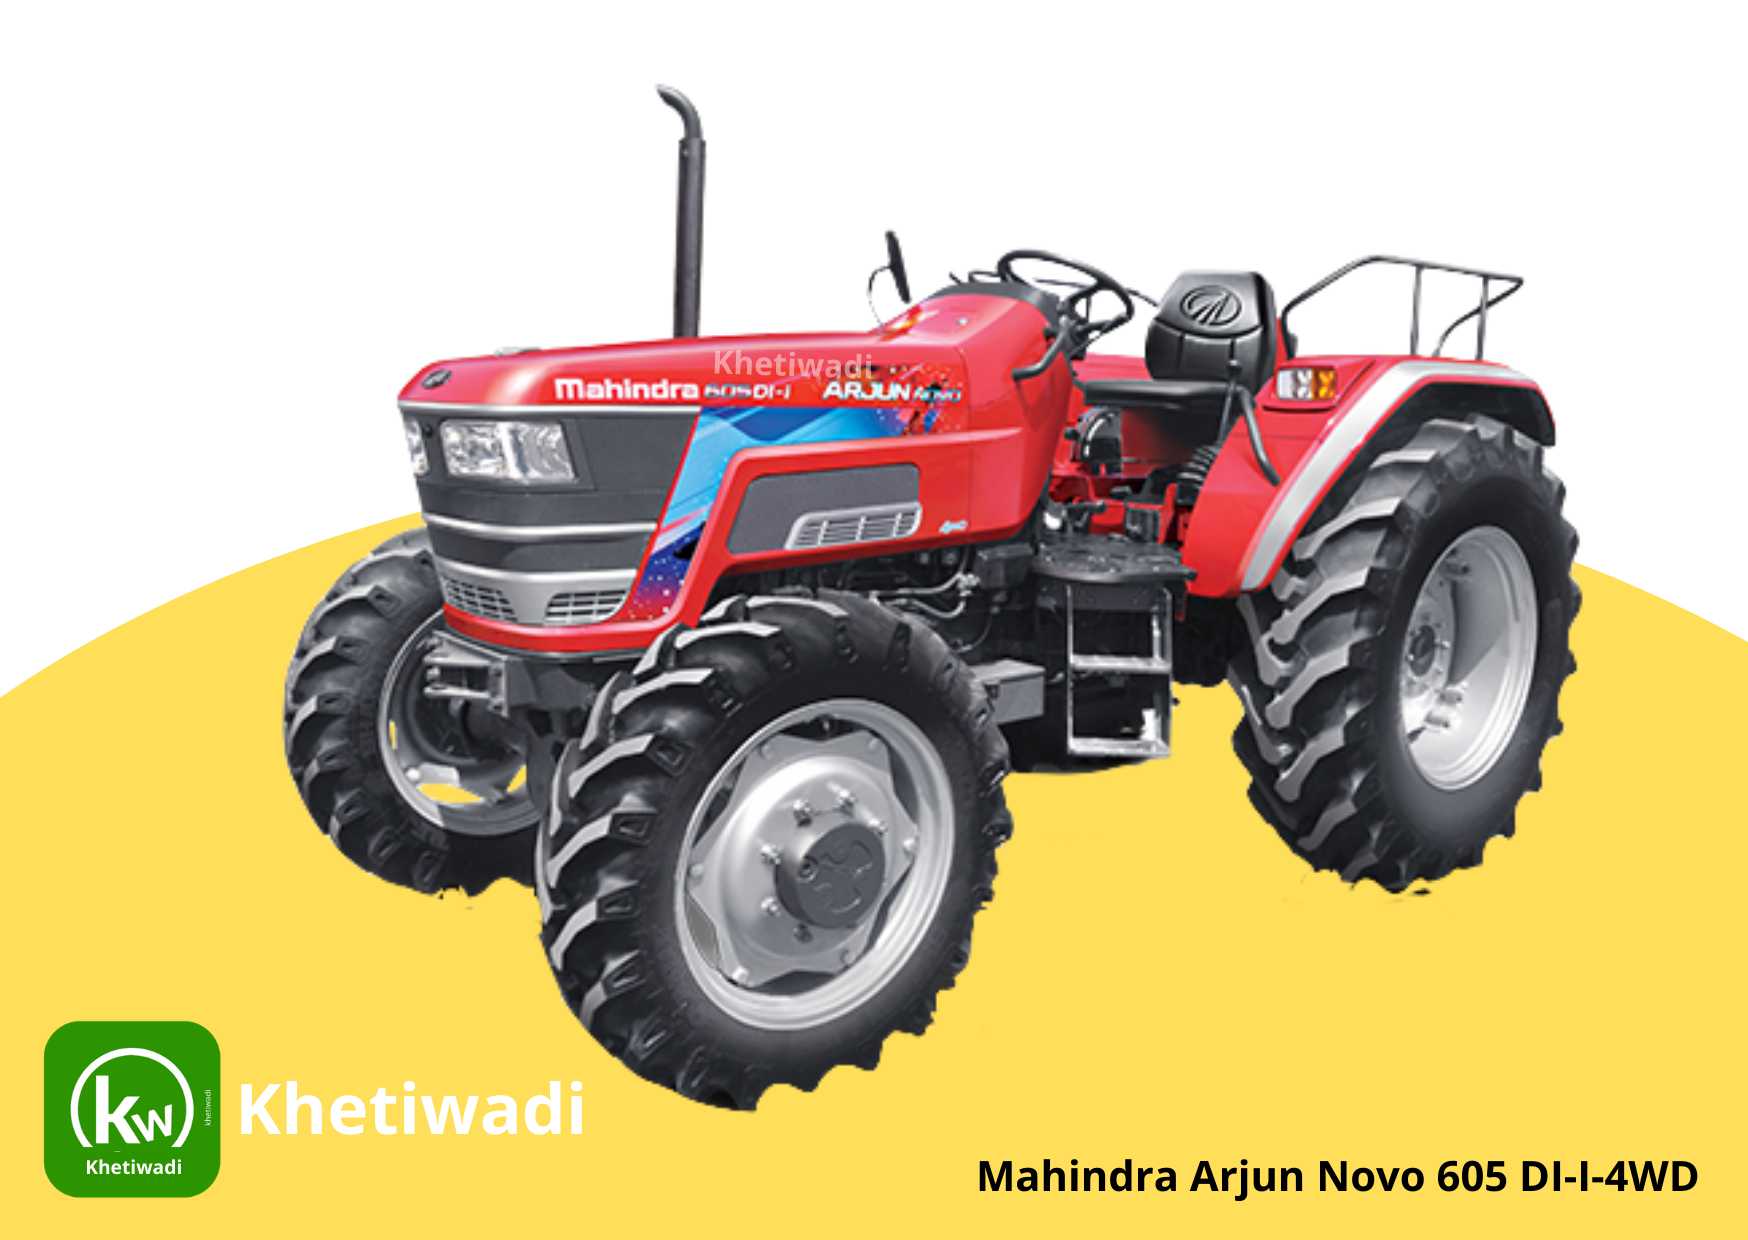 Mahindra Arjun Novo 605 DI-I-4WD image